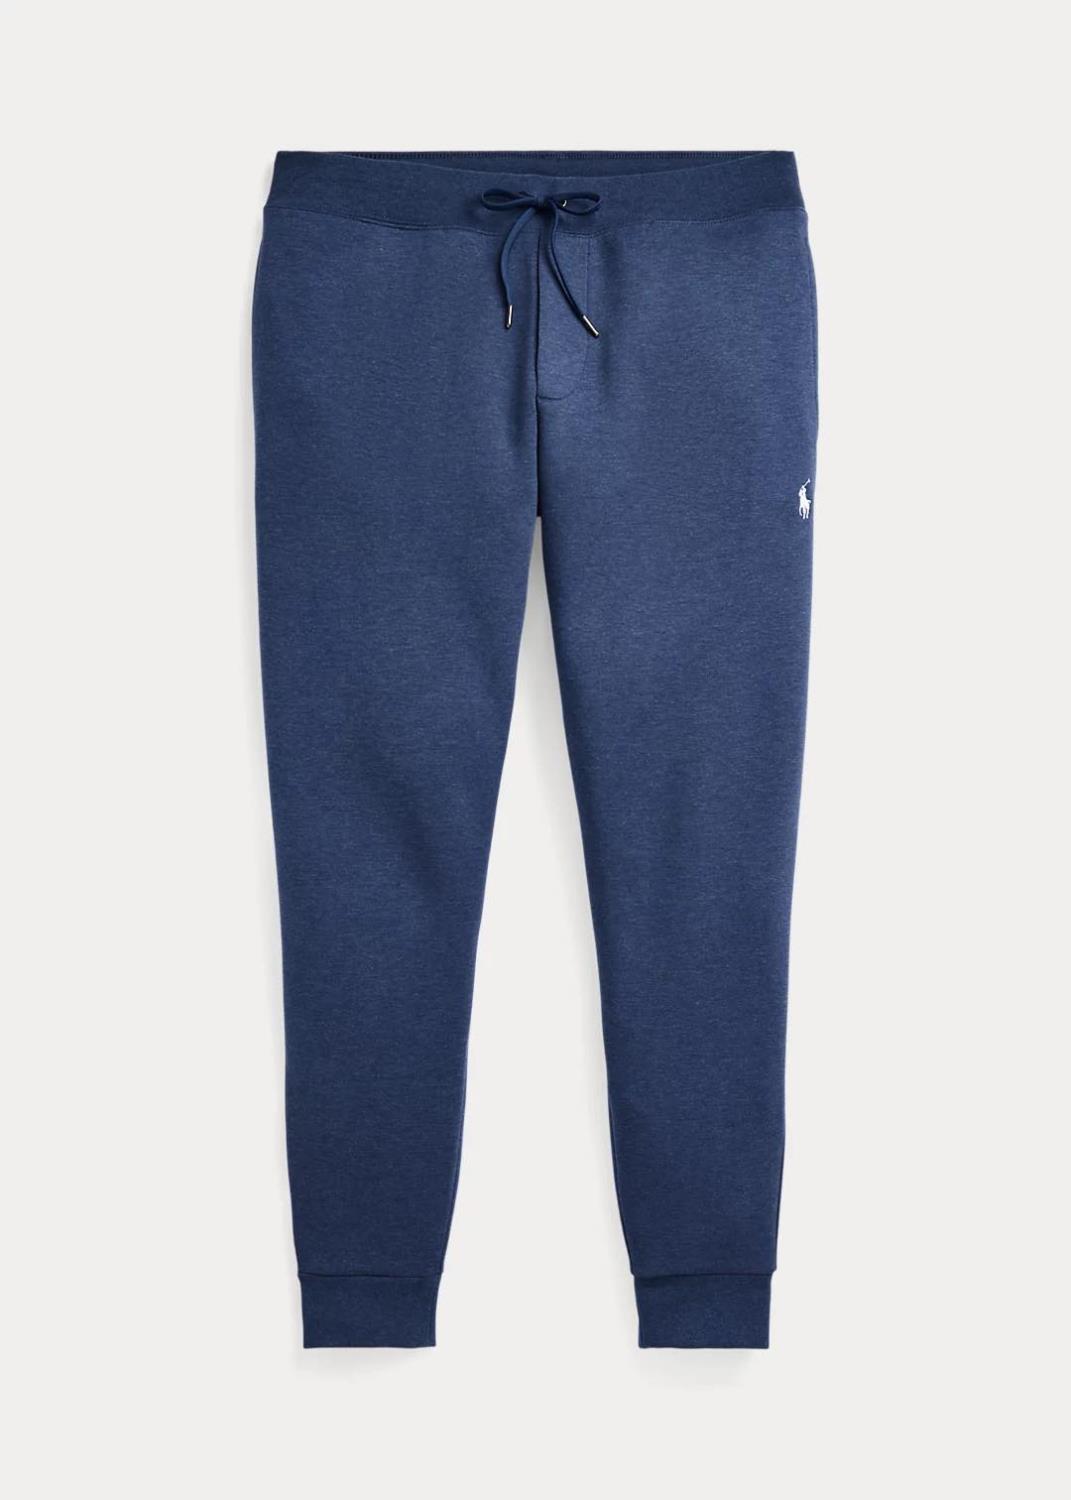 Polo Ralph Lauren College pants - Derby Blue Heather